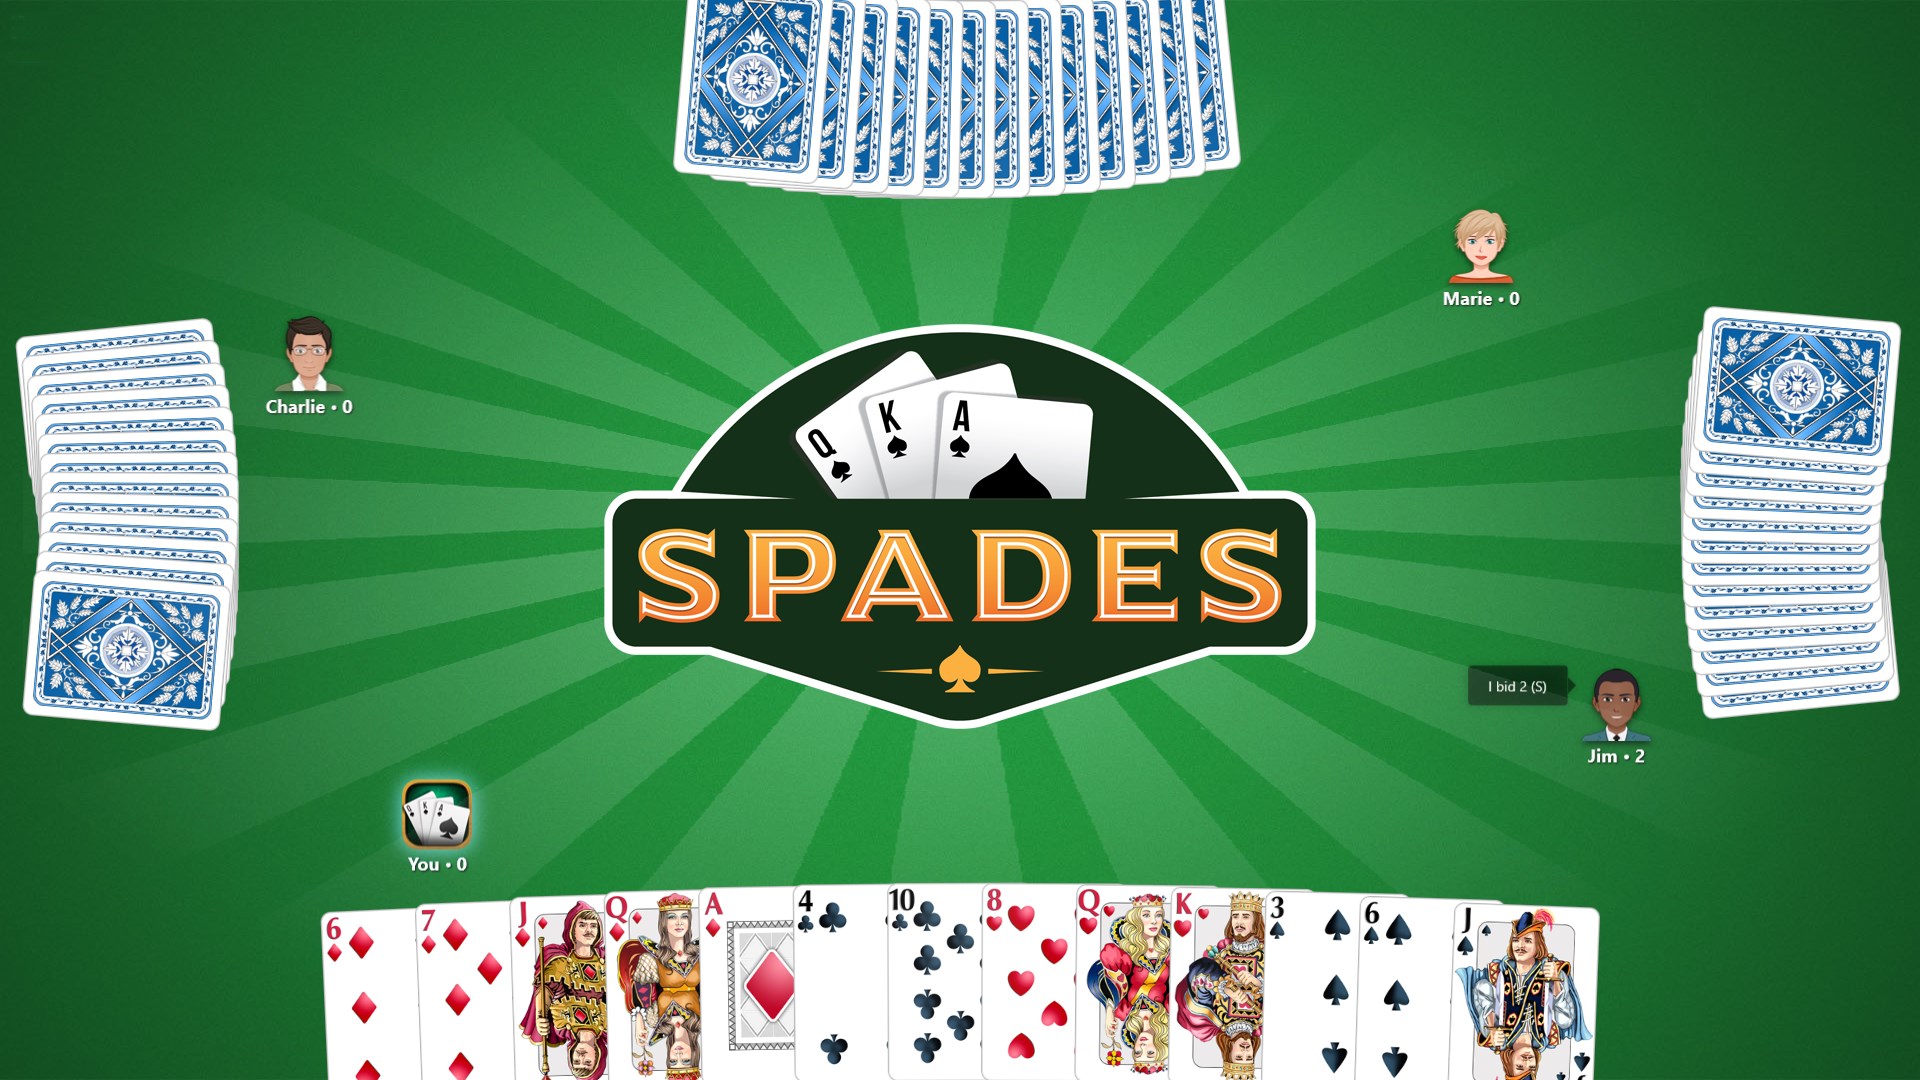 Spades - Free Online Games - Games.com 